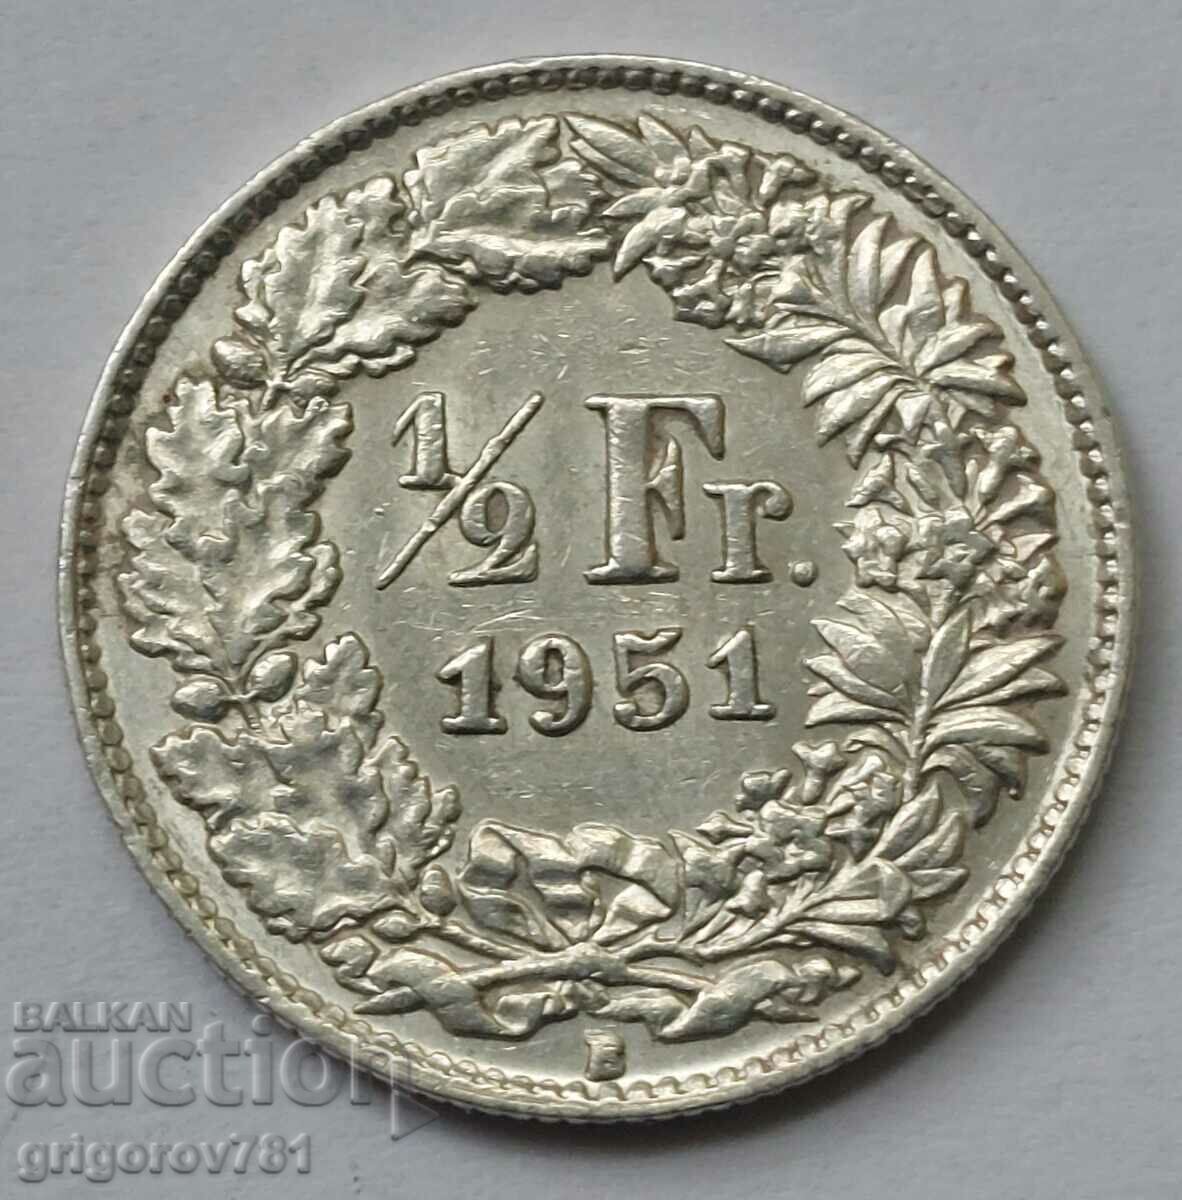 1/2 Franc Silver Switzerland 1951 B - Silver Coin #93